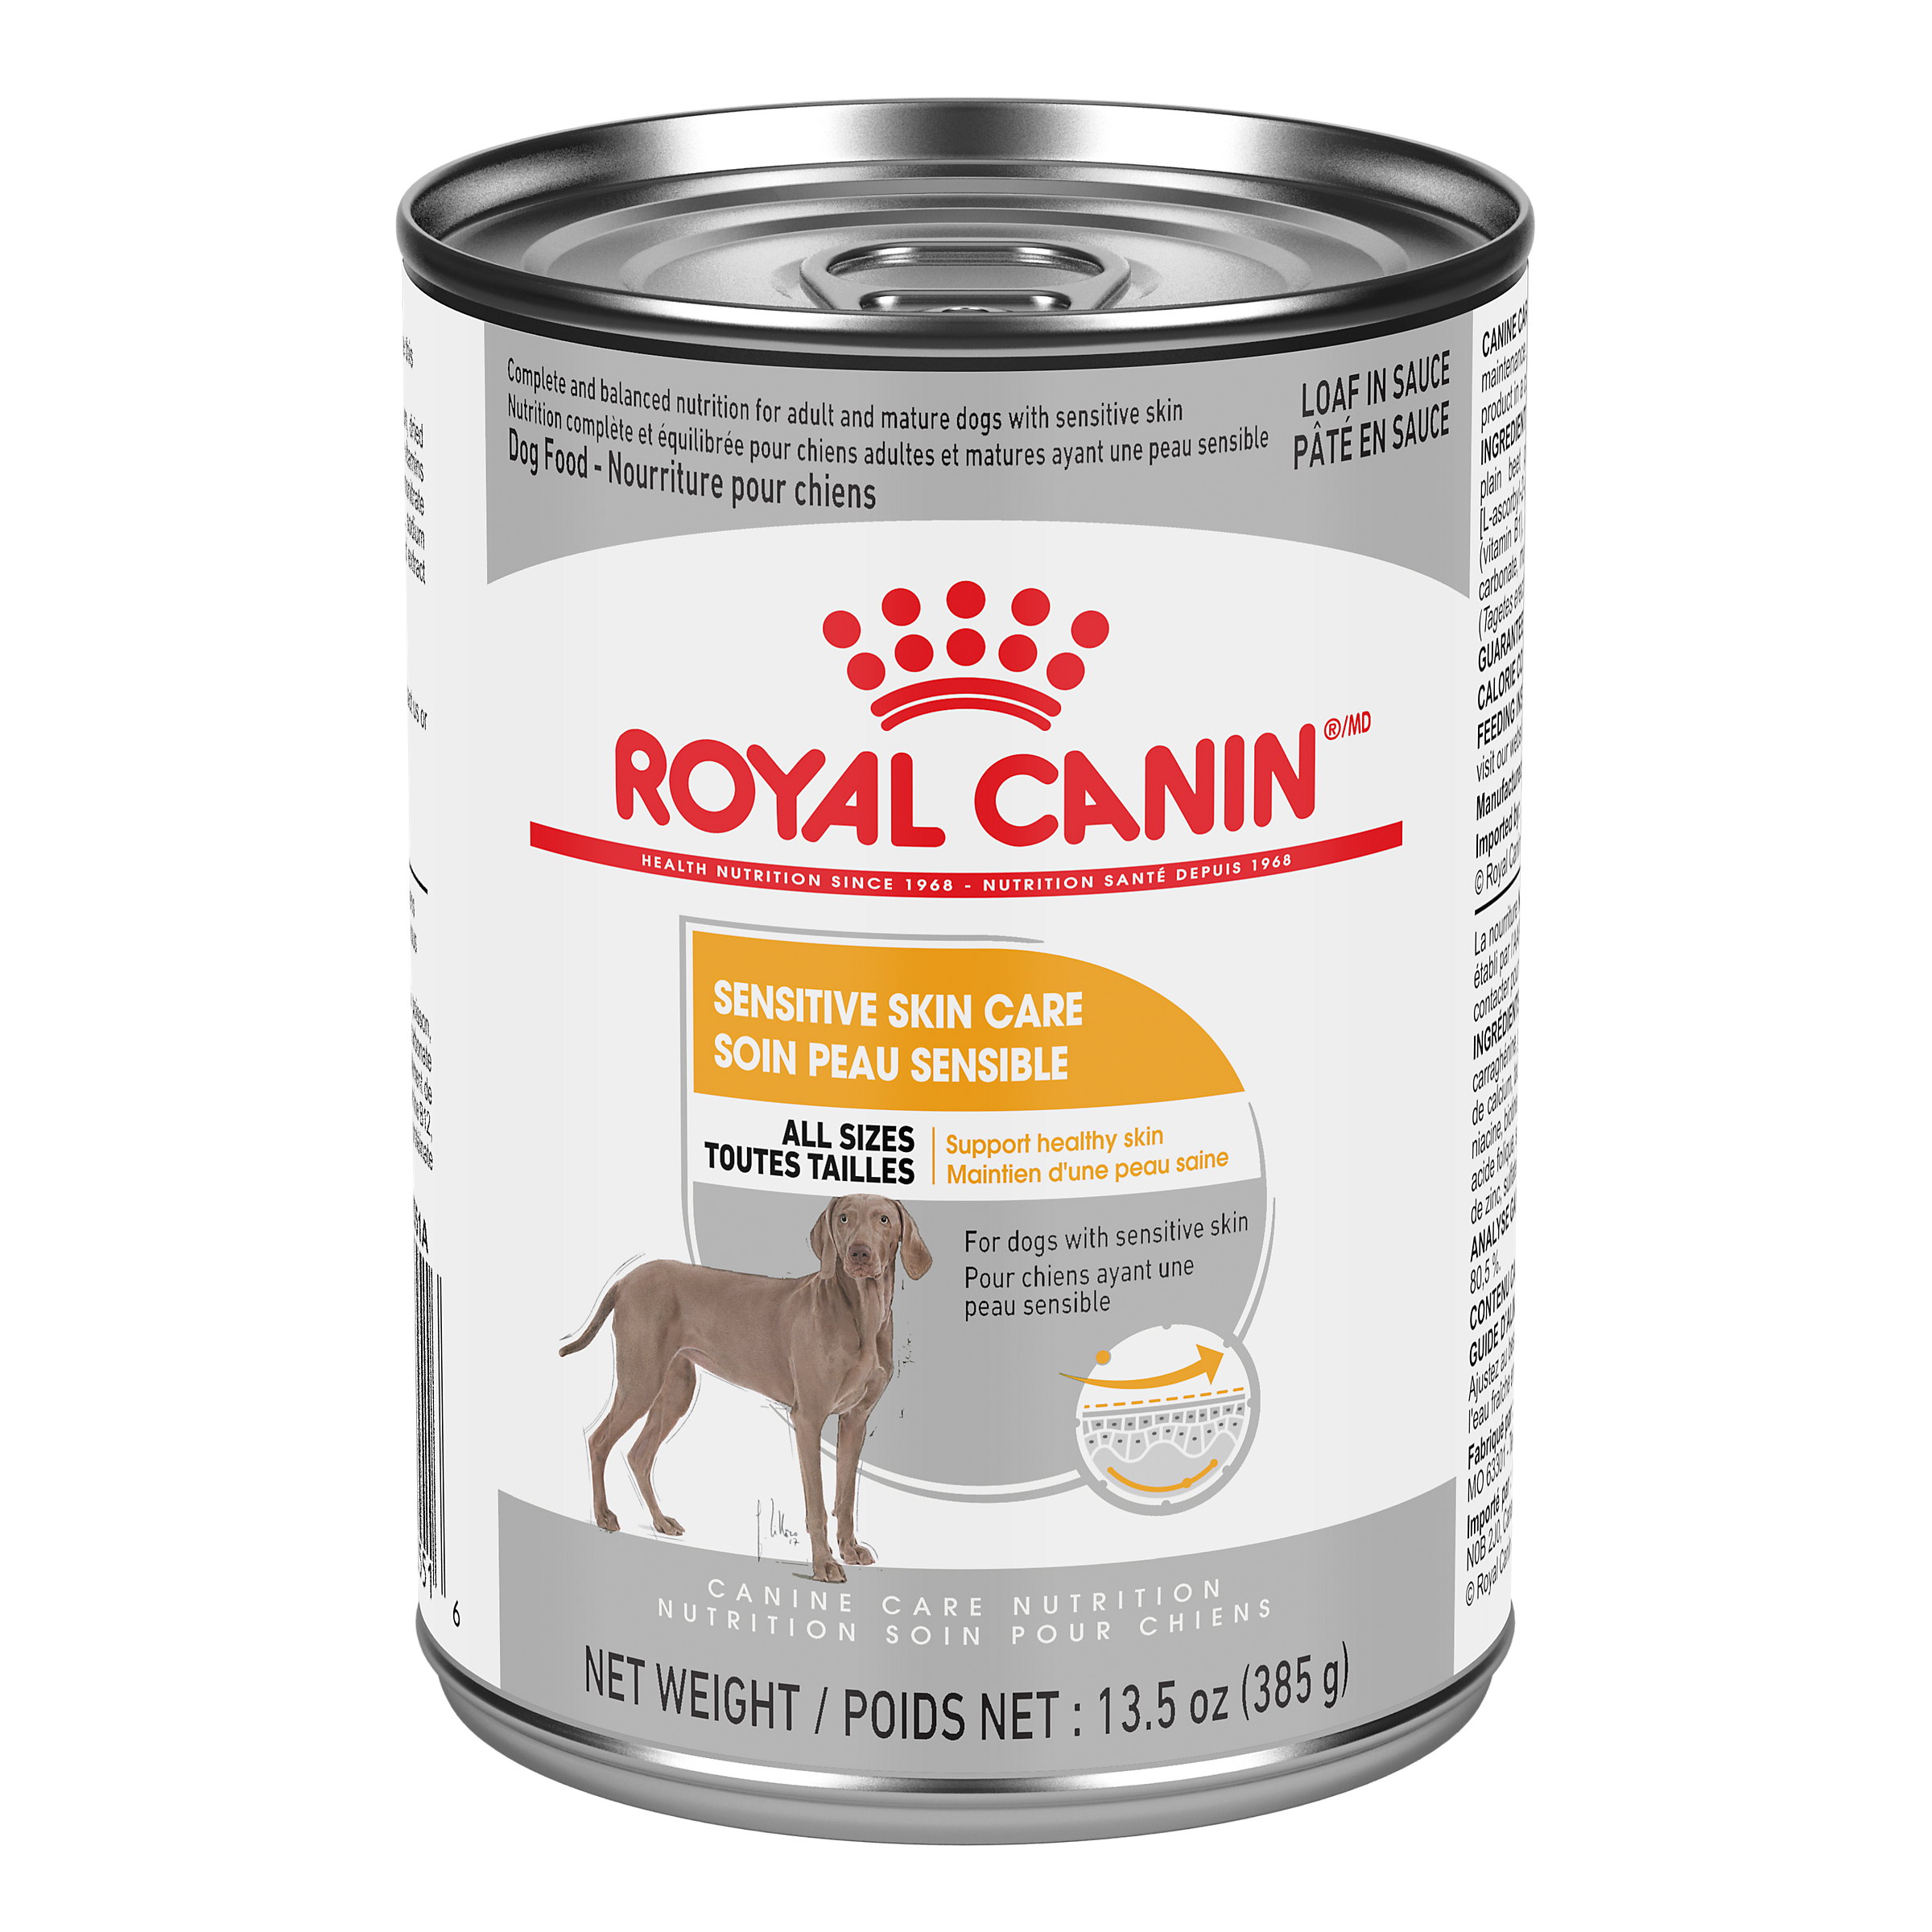 Sensitive Skin Care Canned Dog Food Royal Canin